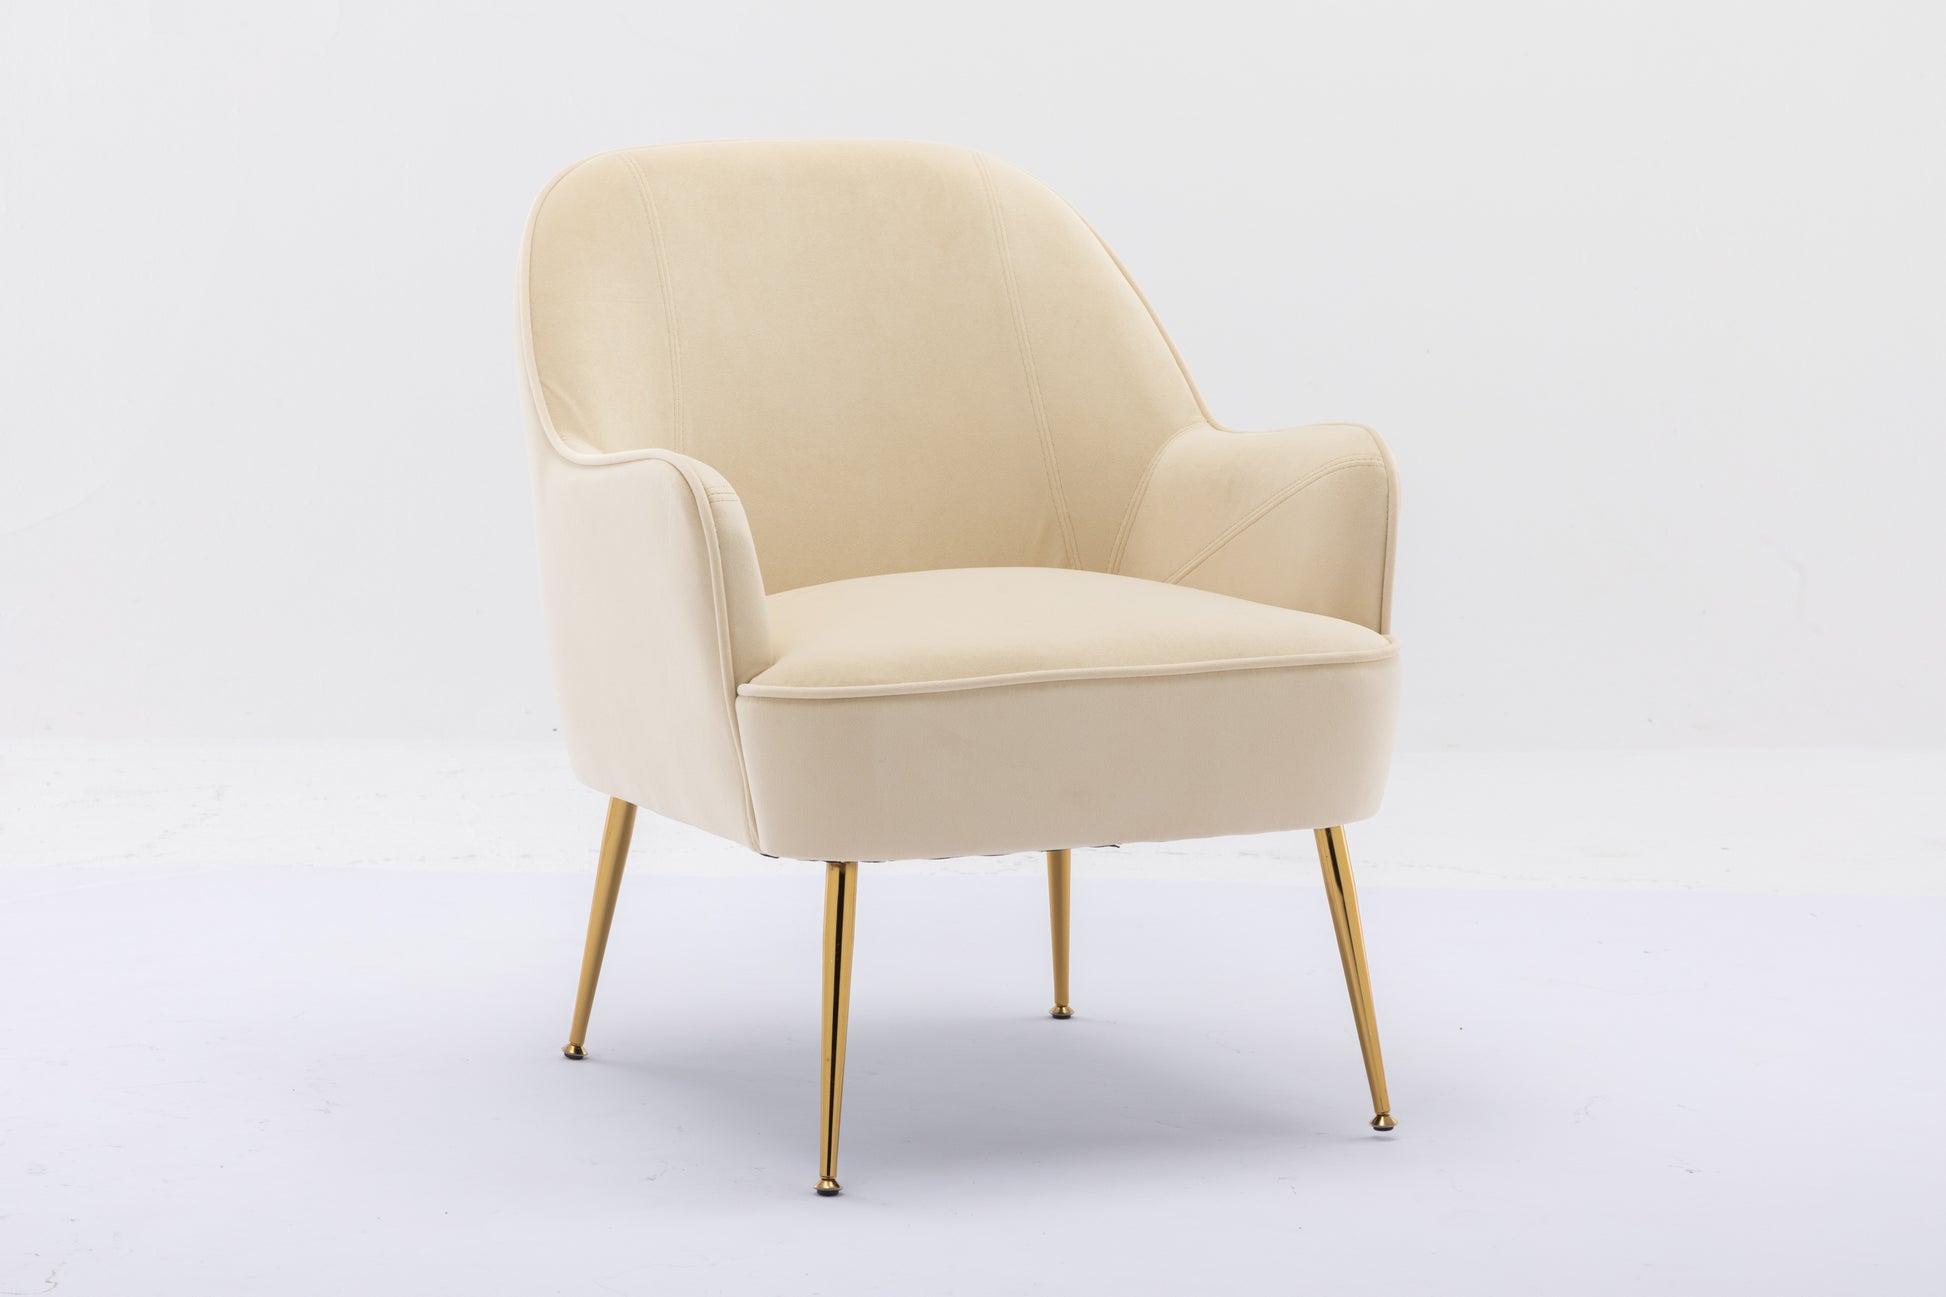 Modern Ergonomics Soft Velvet Fabric Accent Chair With Gold Legs And Adjustable Feet - Cream